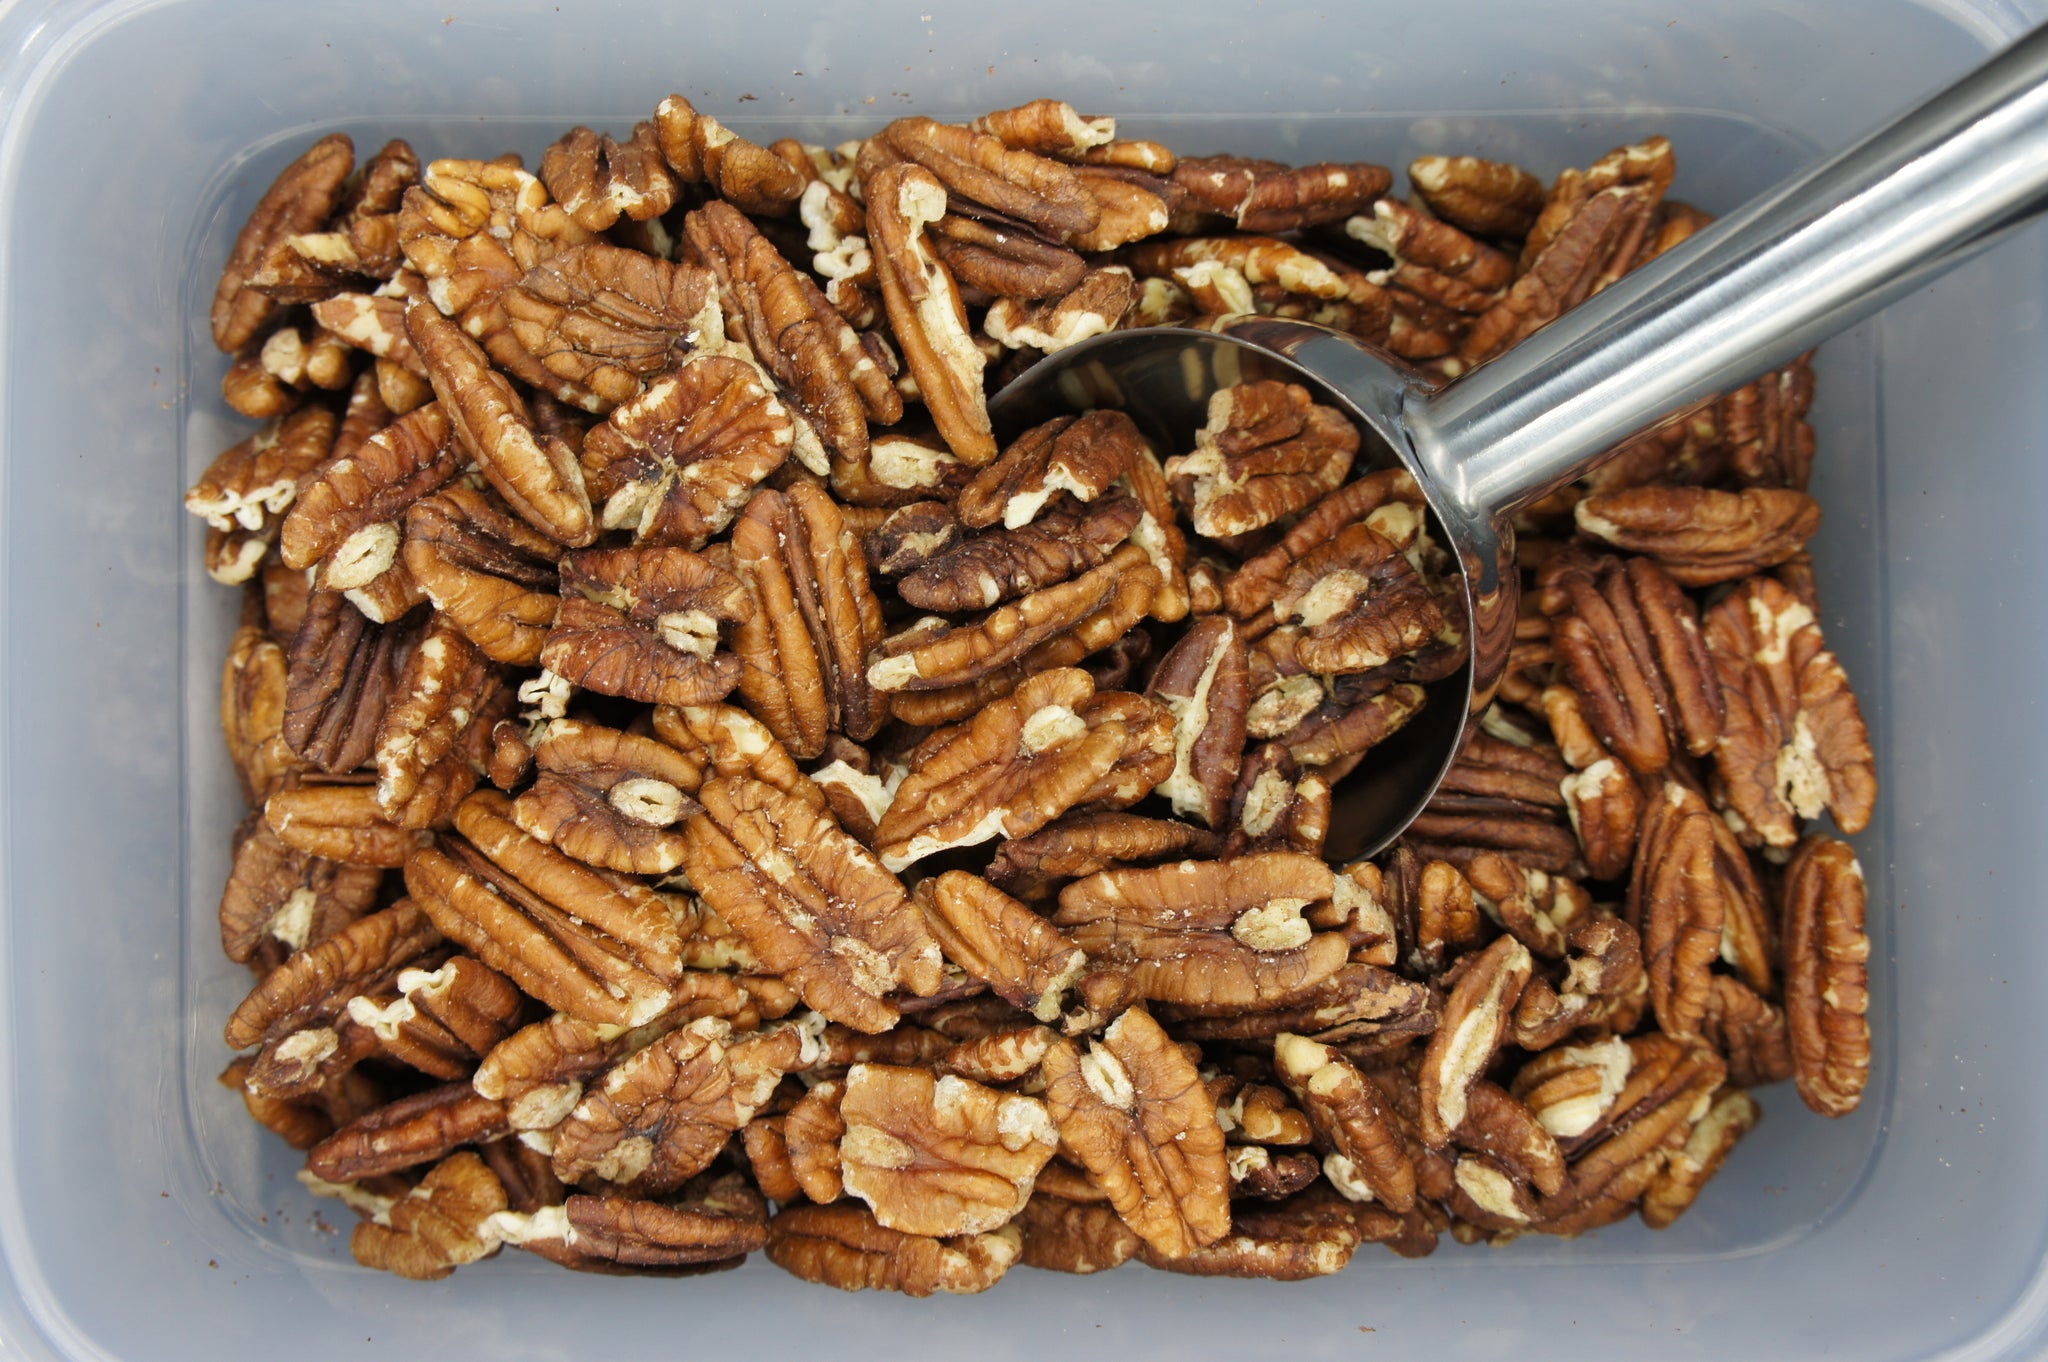 Pecan nuts per 100g BBE:June 24